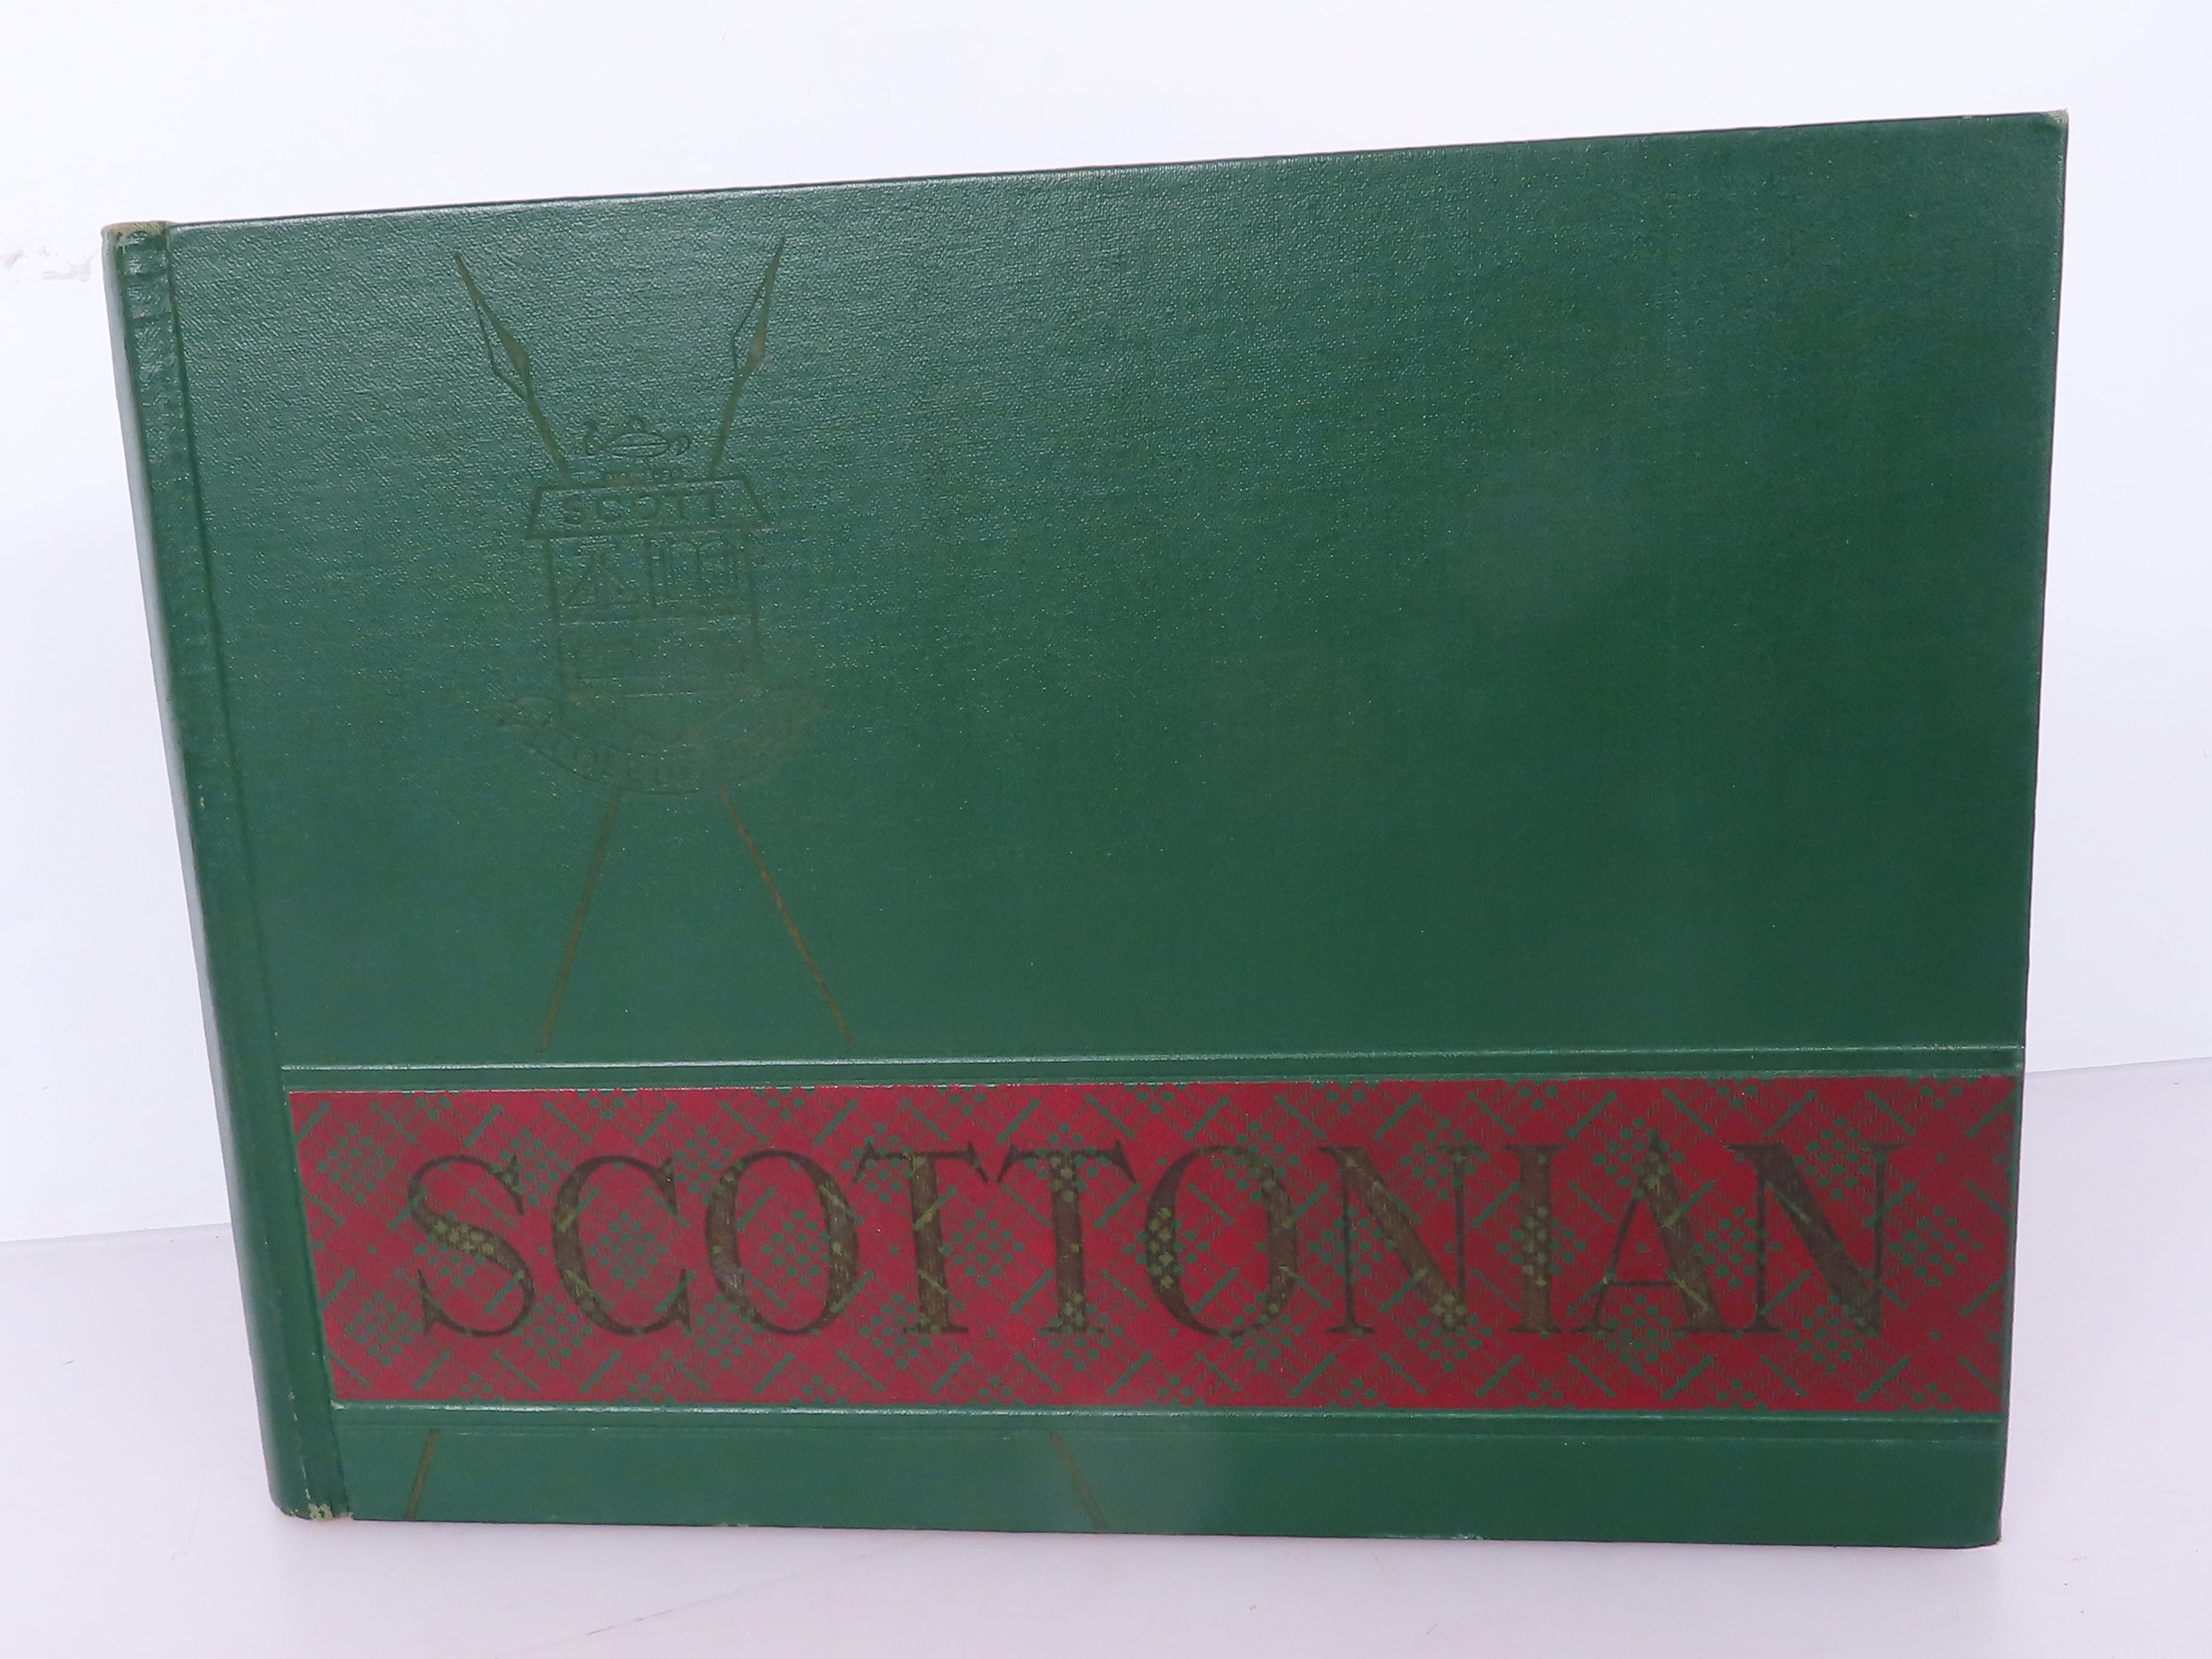 Scottonian 1950 Scott High School Yearbook Toledo, Ohio